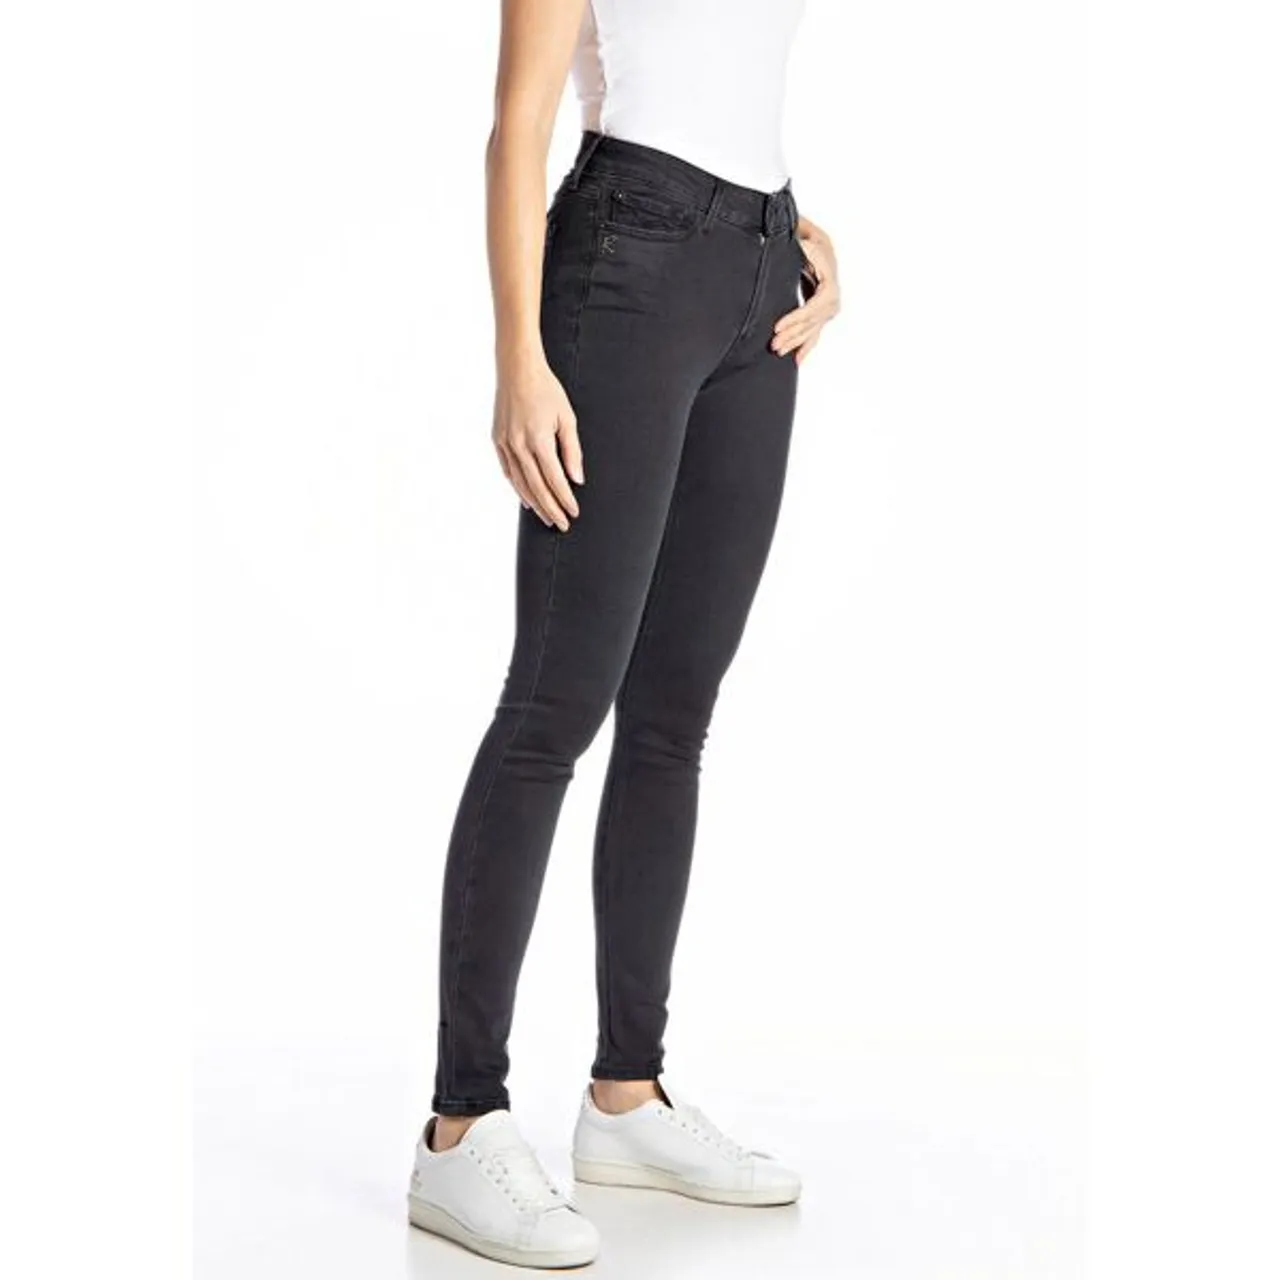 Skinny-fit-Jeans REPLAY "LUZIEN" Gr. 26, Länge 30, grau (dark grey) Damen Jeans Röhrenjeans